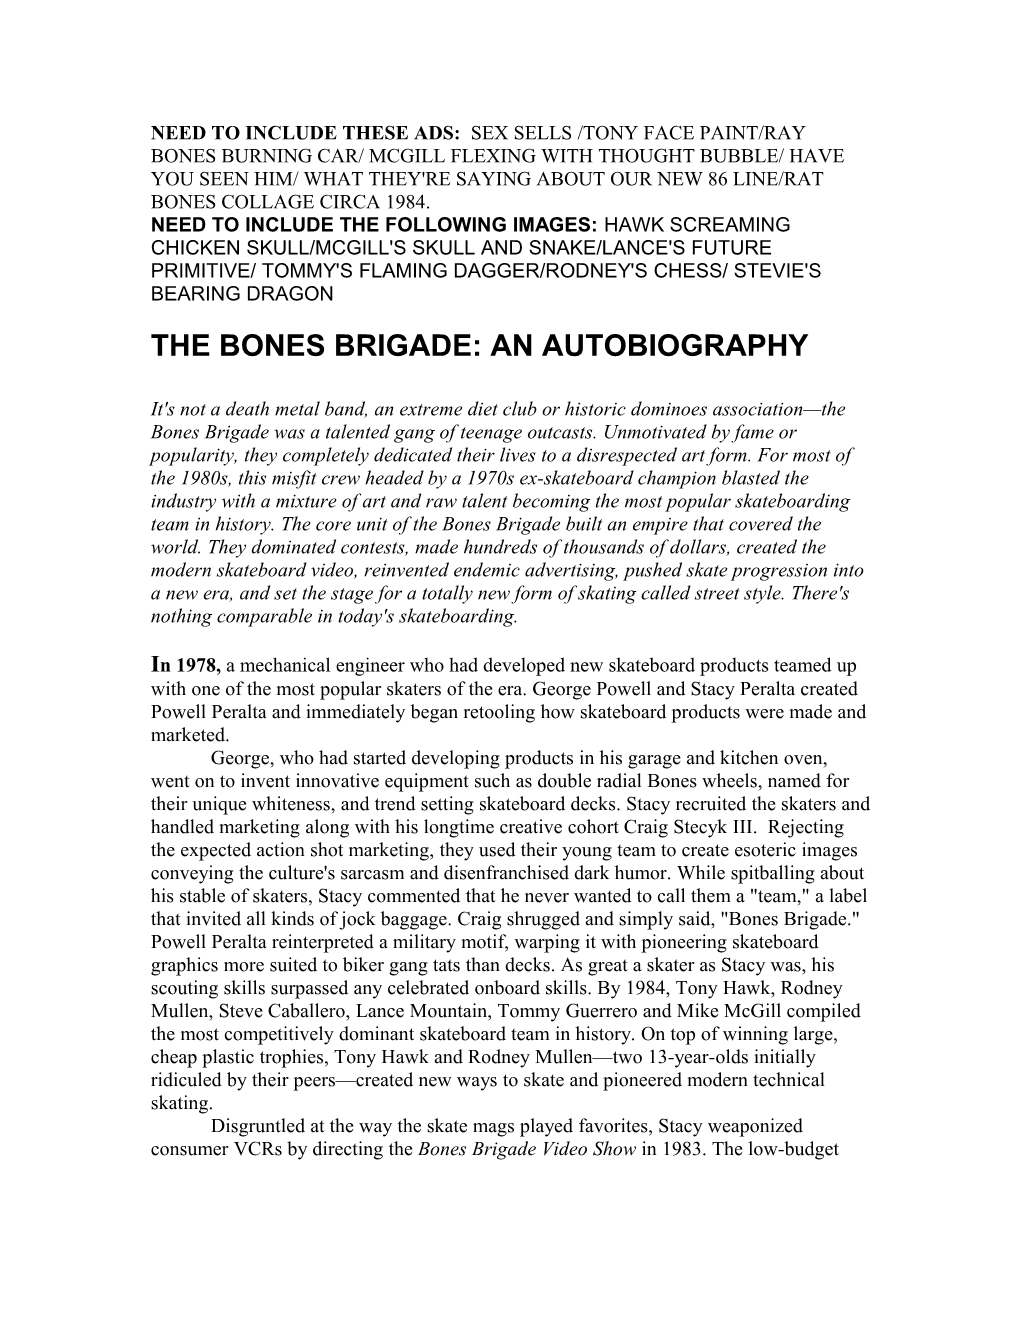 The Bones Brigade: an Autobiography